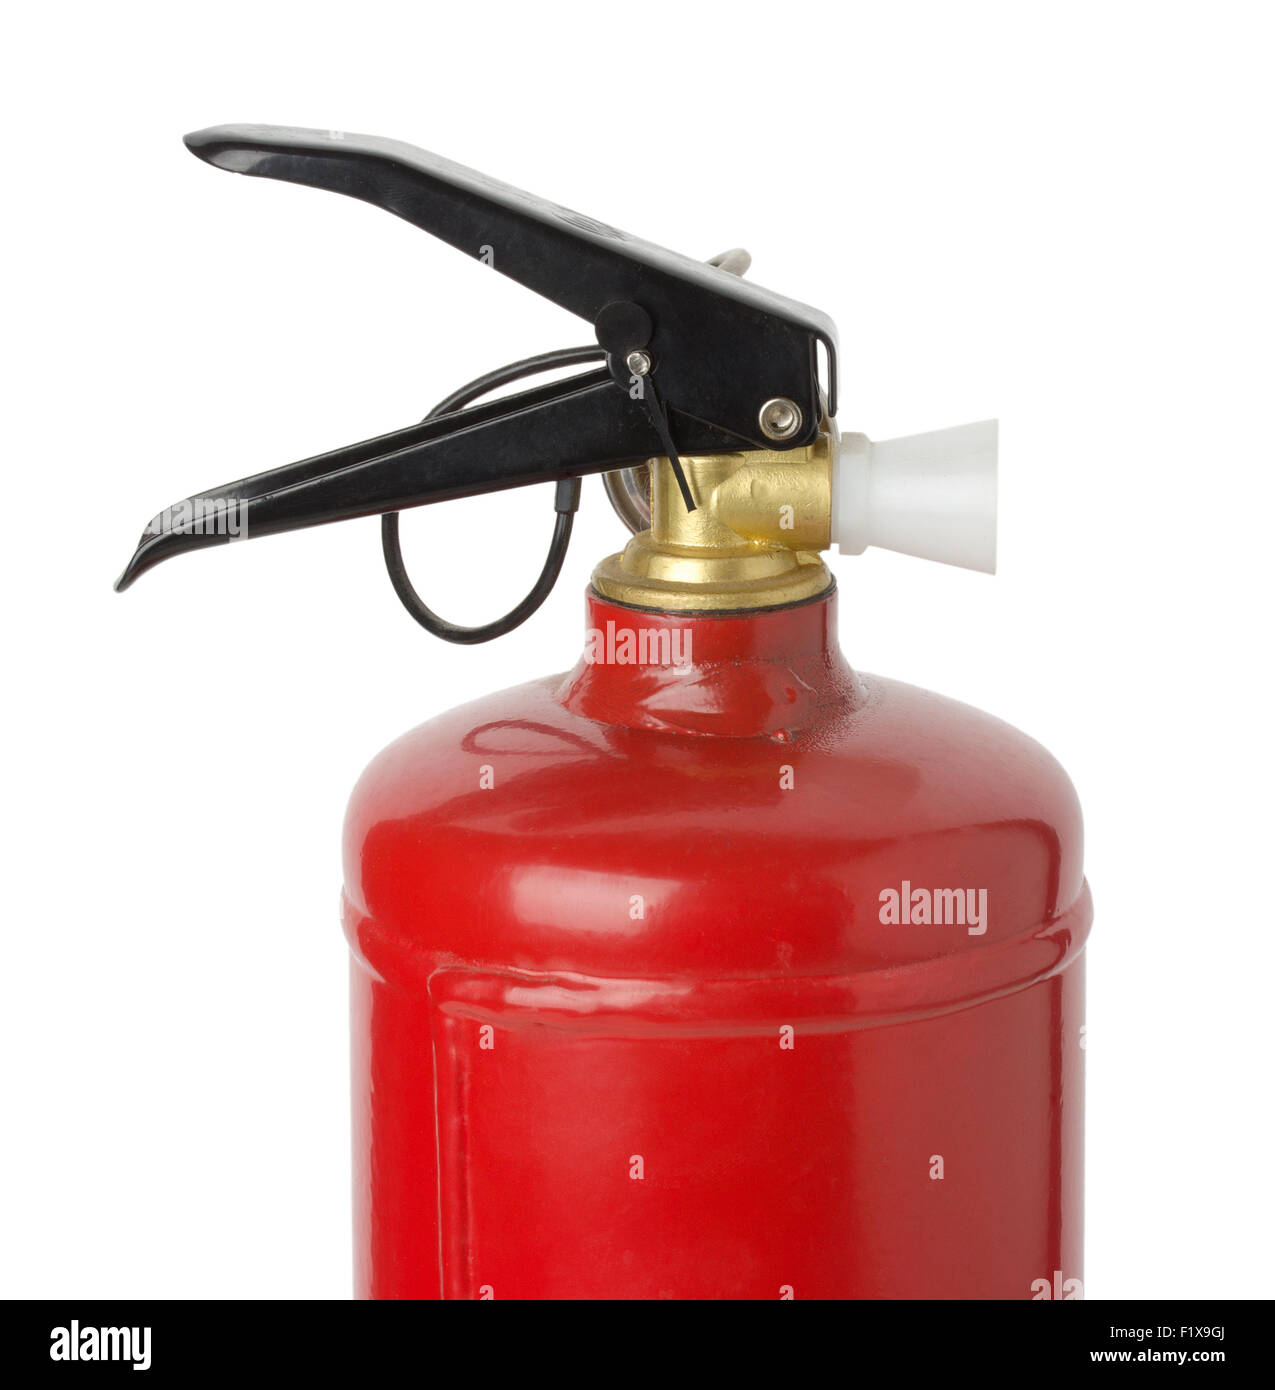 Fire extinguisher on white background. Stock Photo